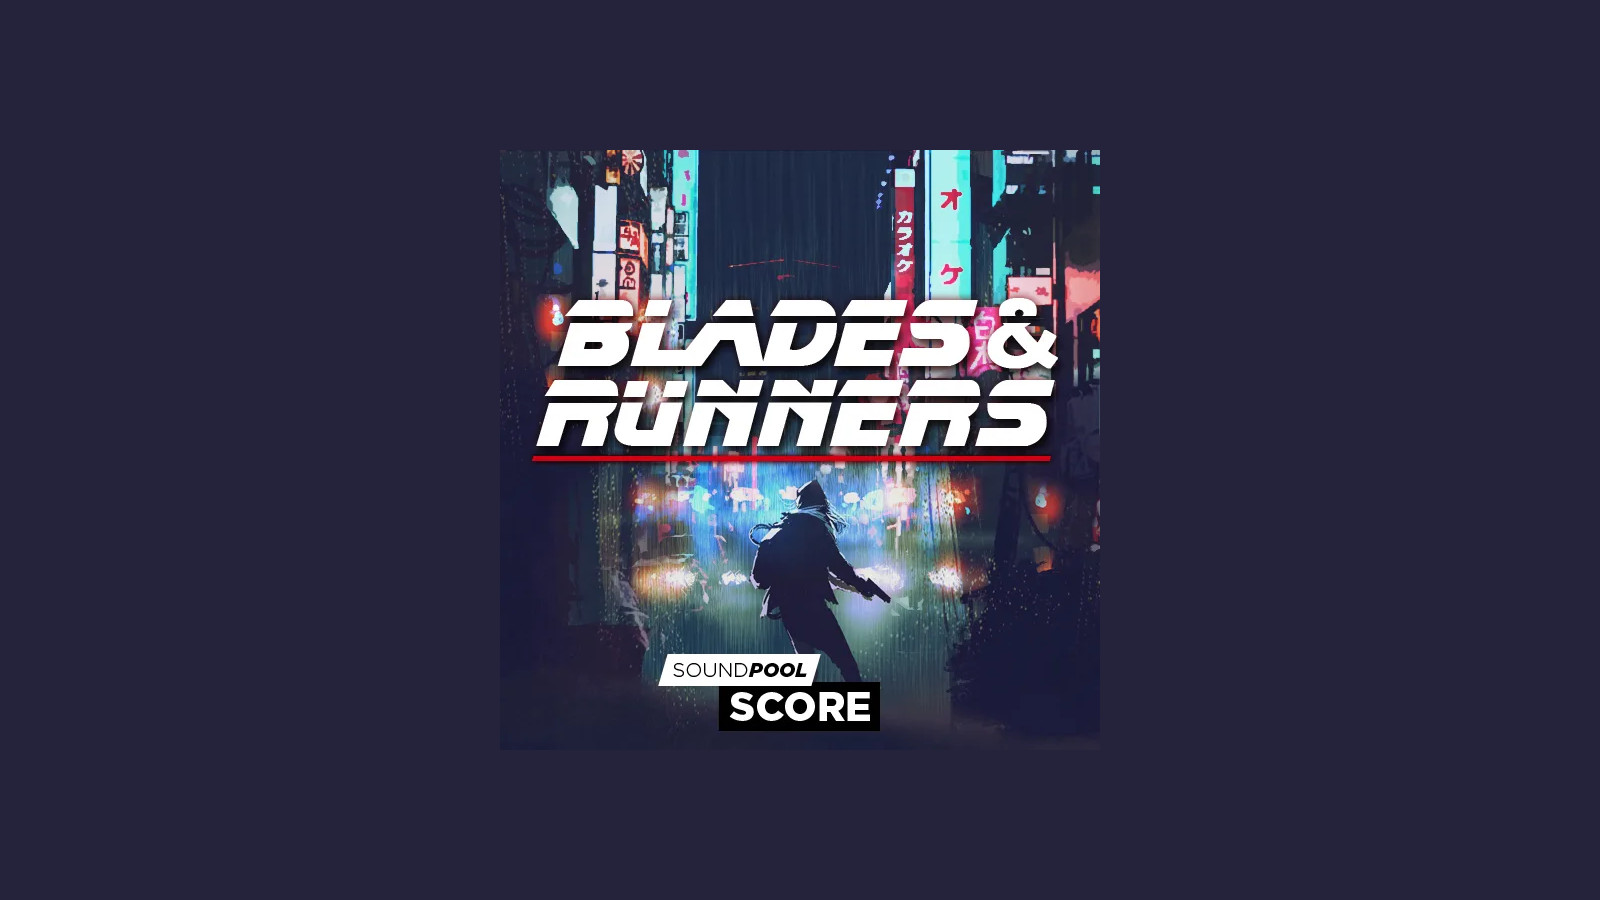 MAGIX Soundpool Blades & Runners ProducerPlanet CD Key (5.65$)